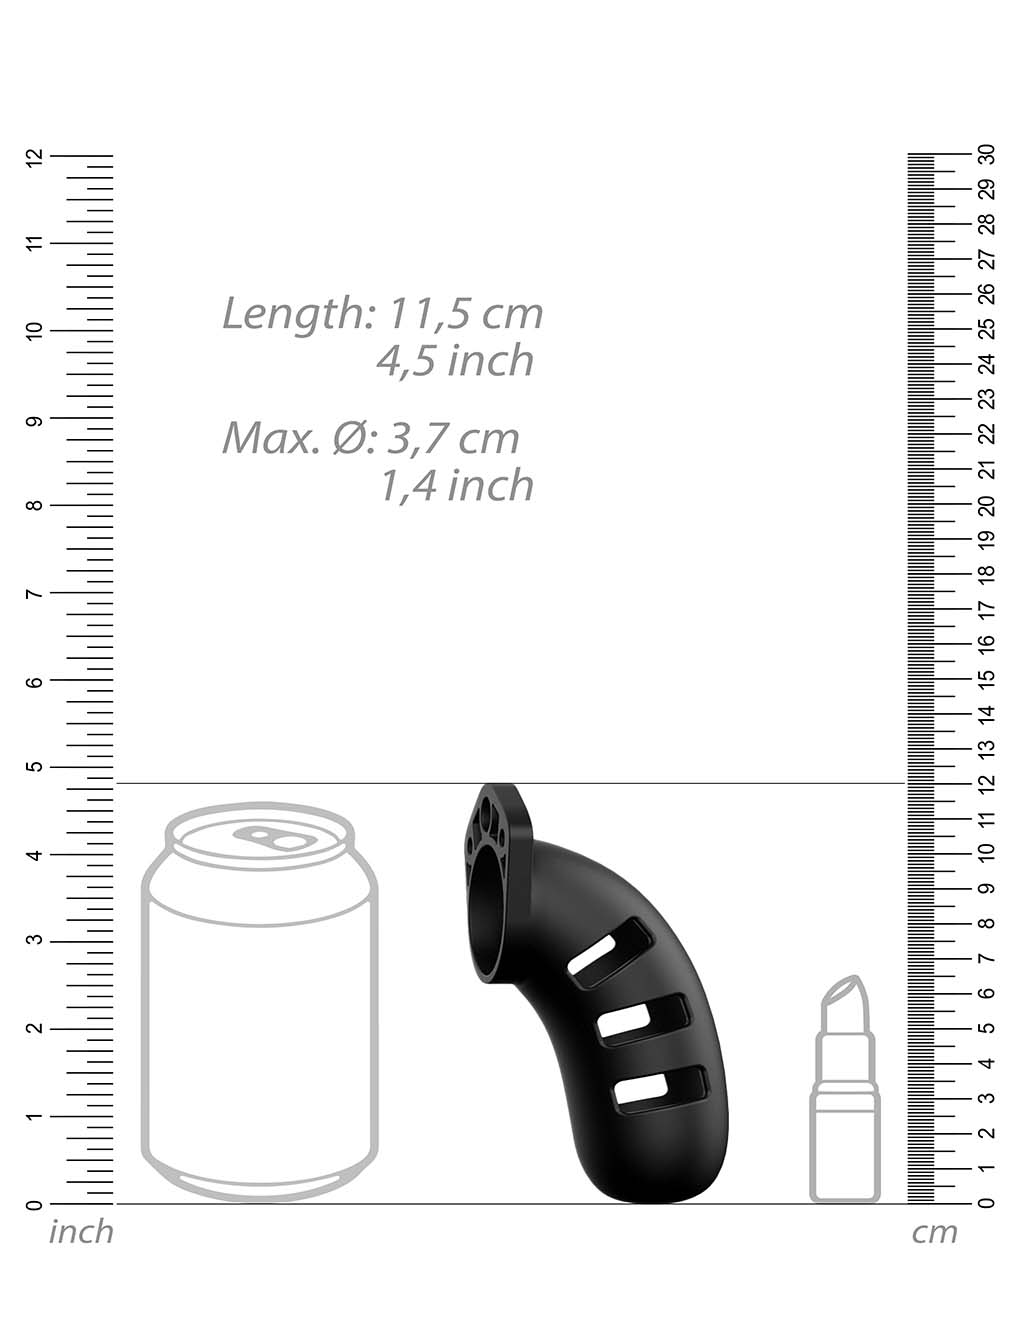 ManCage Model 21 Silicone Cock Cage 4.5"- Measurements